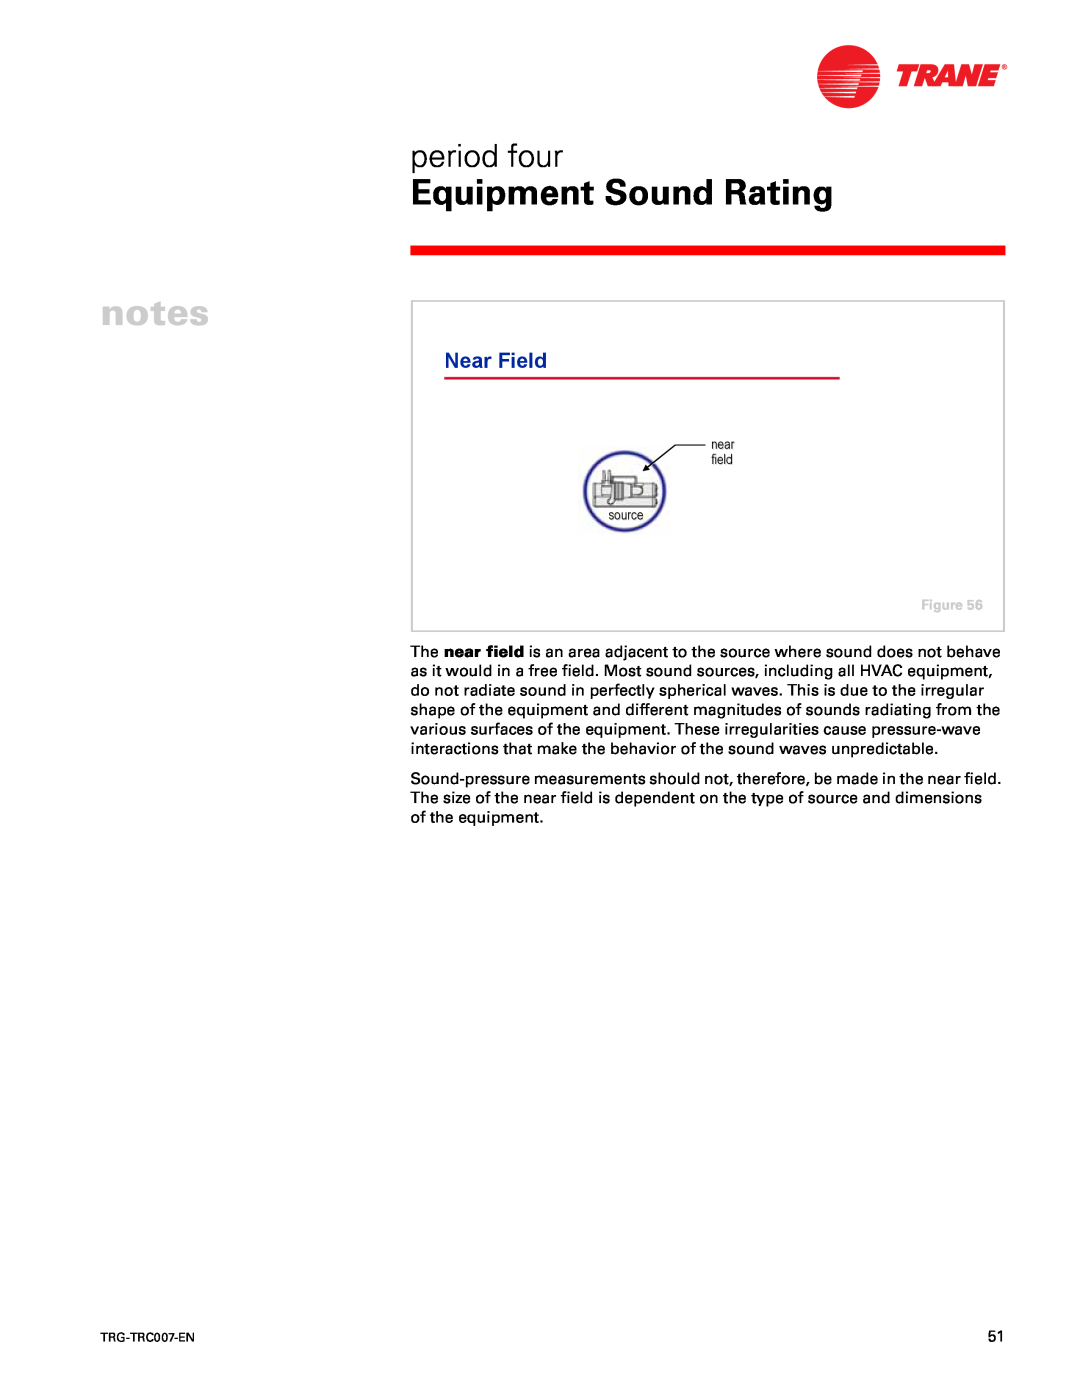 Trane TRG-TRC007-EN manual Near Field, Equipment Sound Rating, period four 